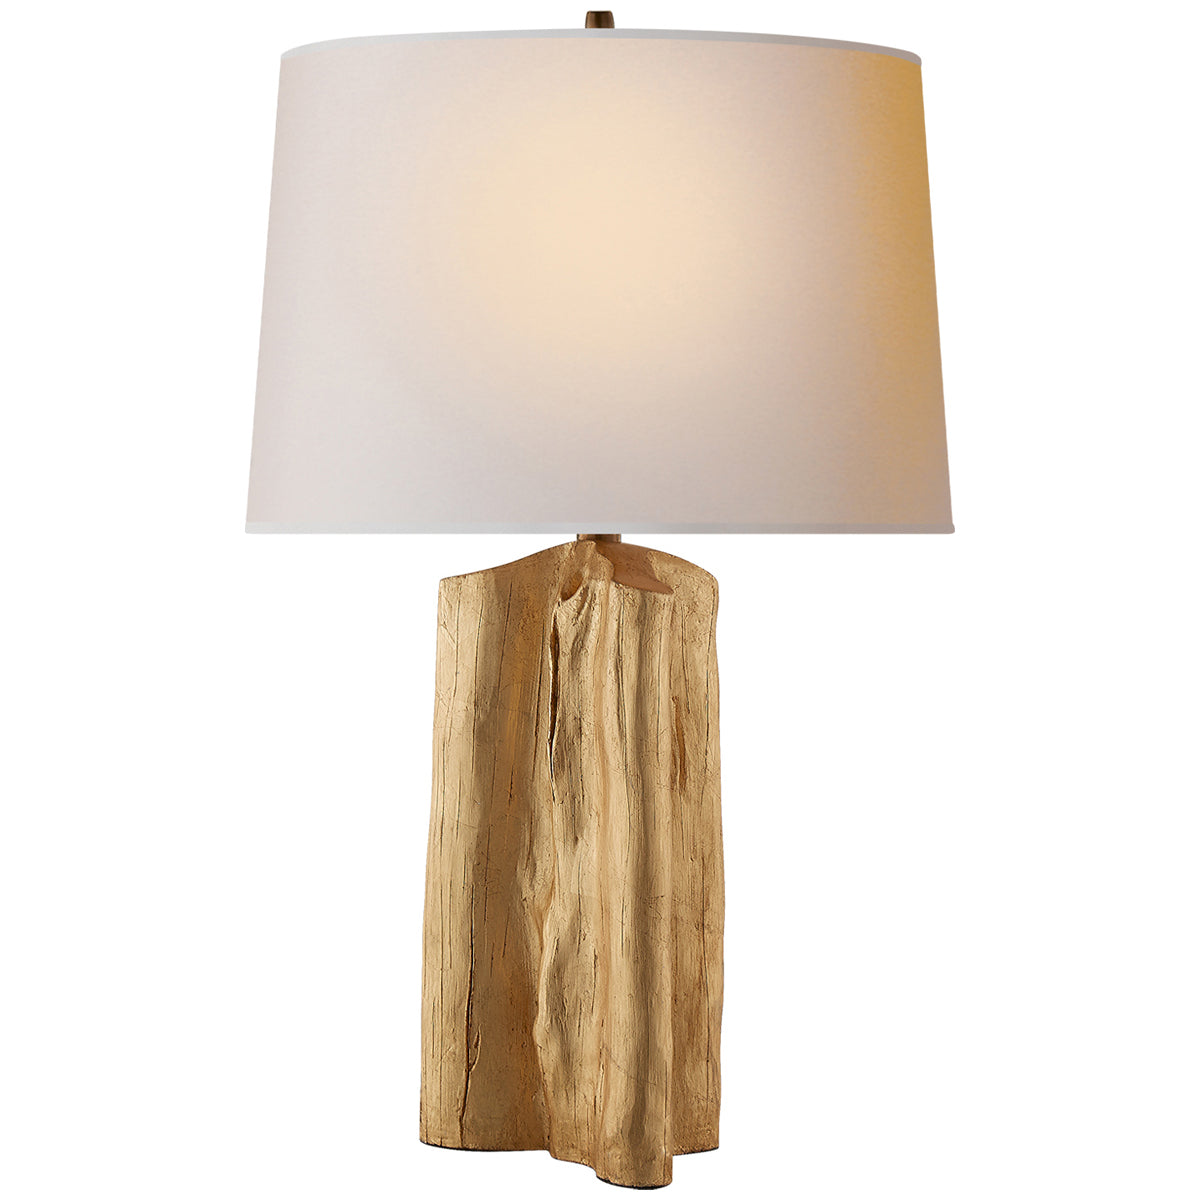 Visual Comfort Sierra Buffet Lamp